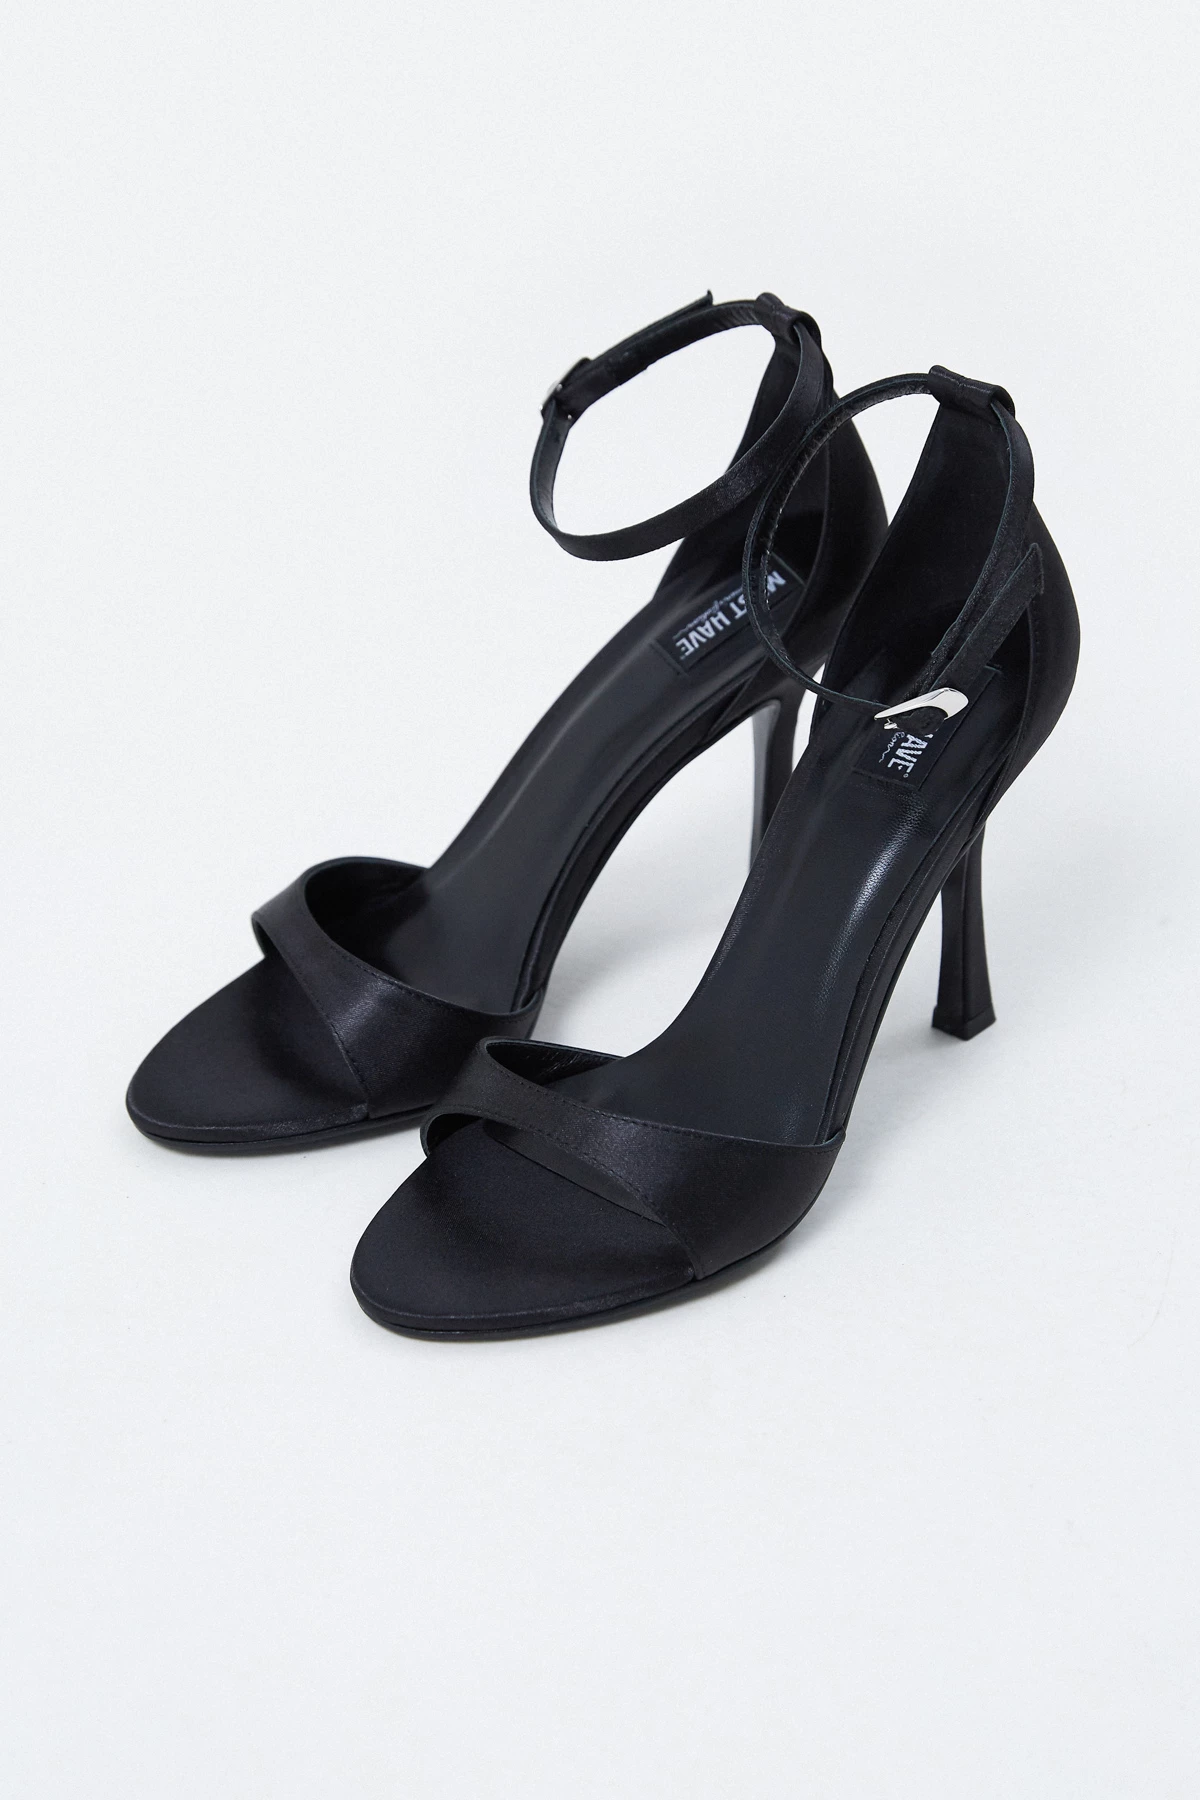 Black satin heels, photo 2